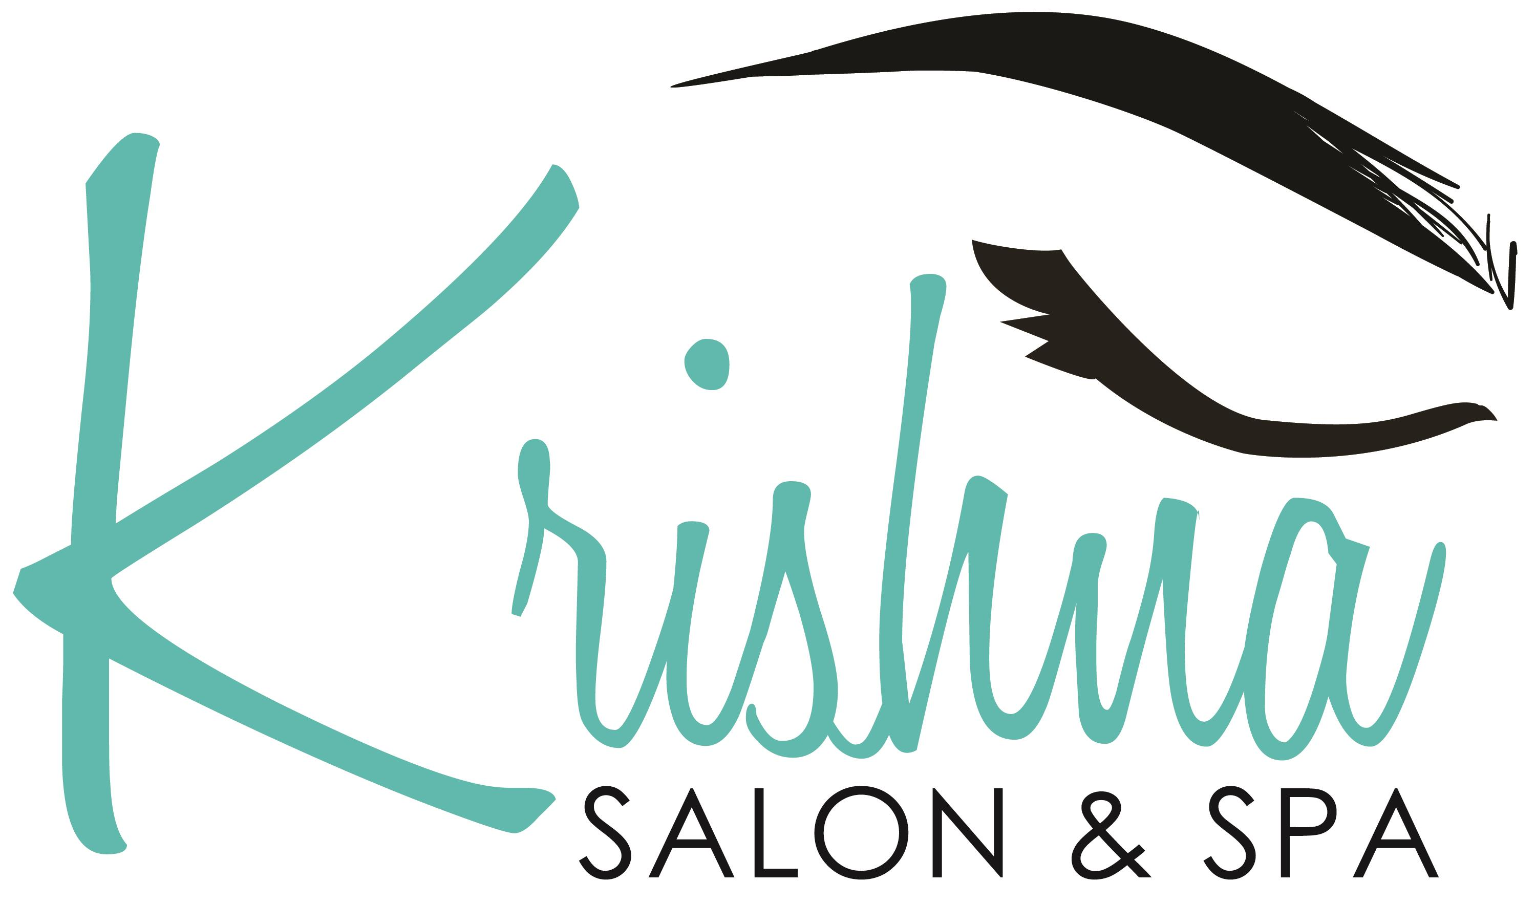 Krishna Salon & Spa | Full Service Salon in Farmington Hills, MI